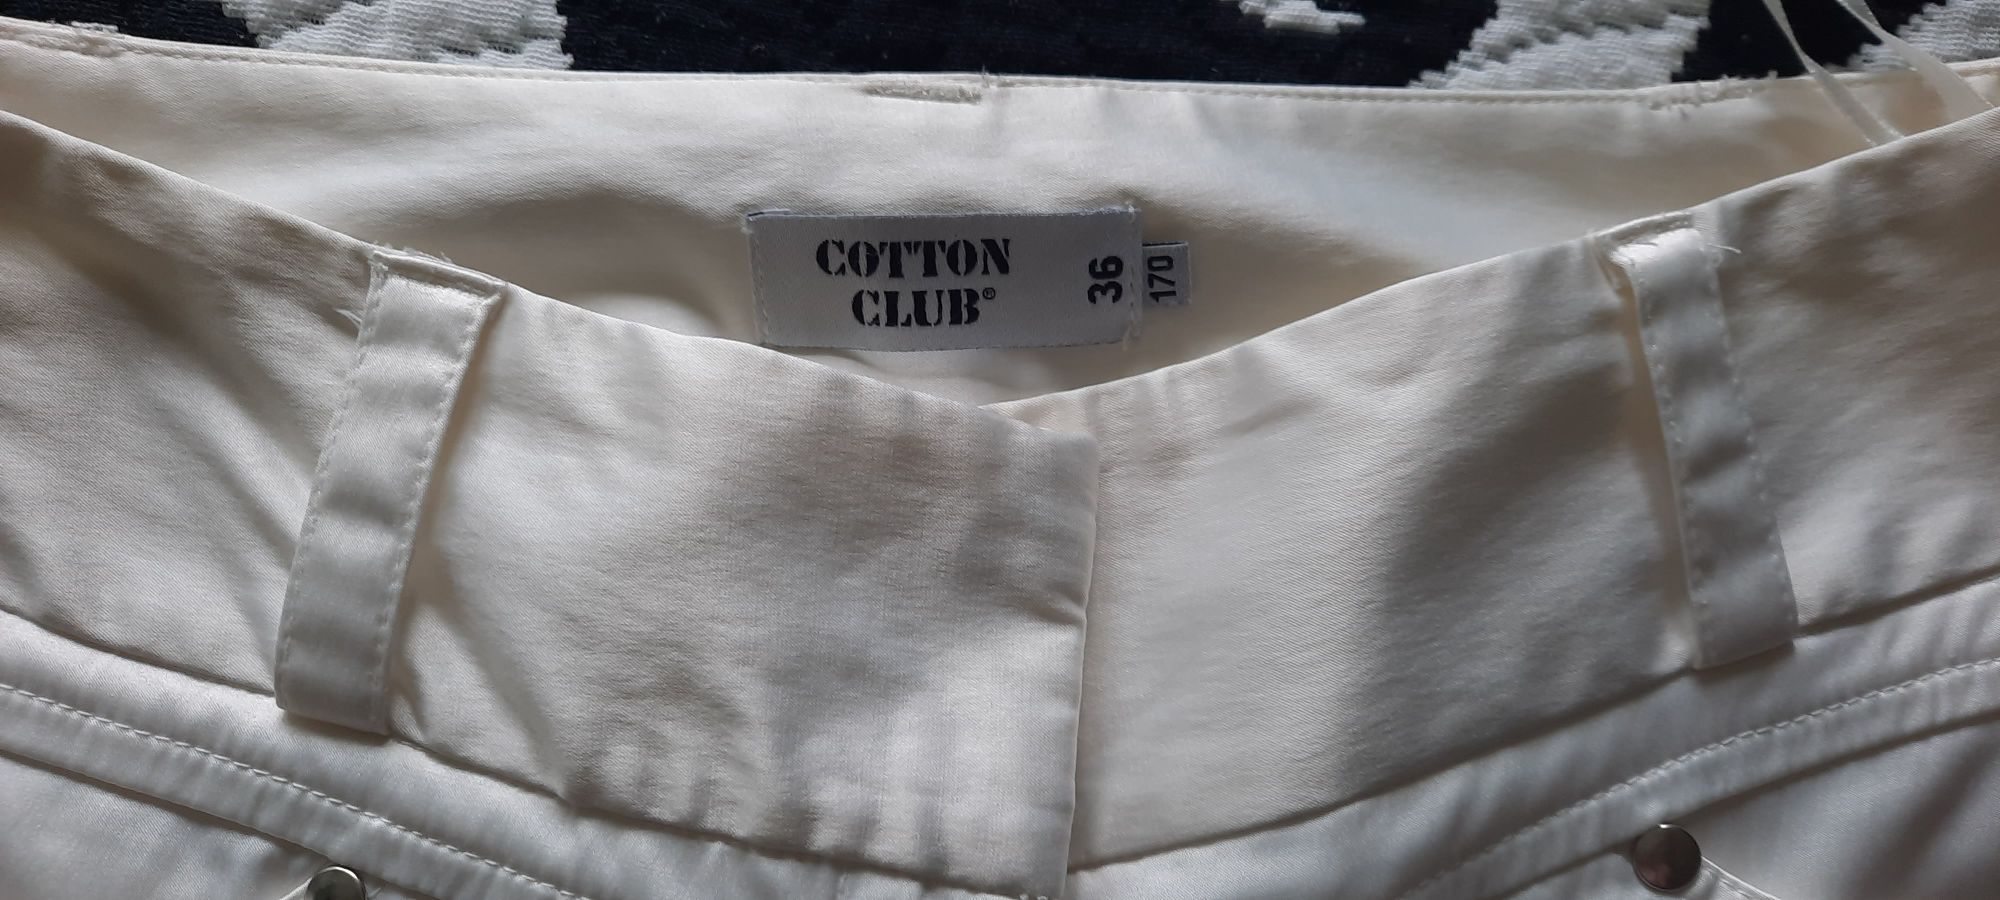 Spodnie damskie eleganckie Cotton Club r.36/38